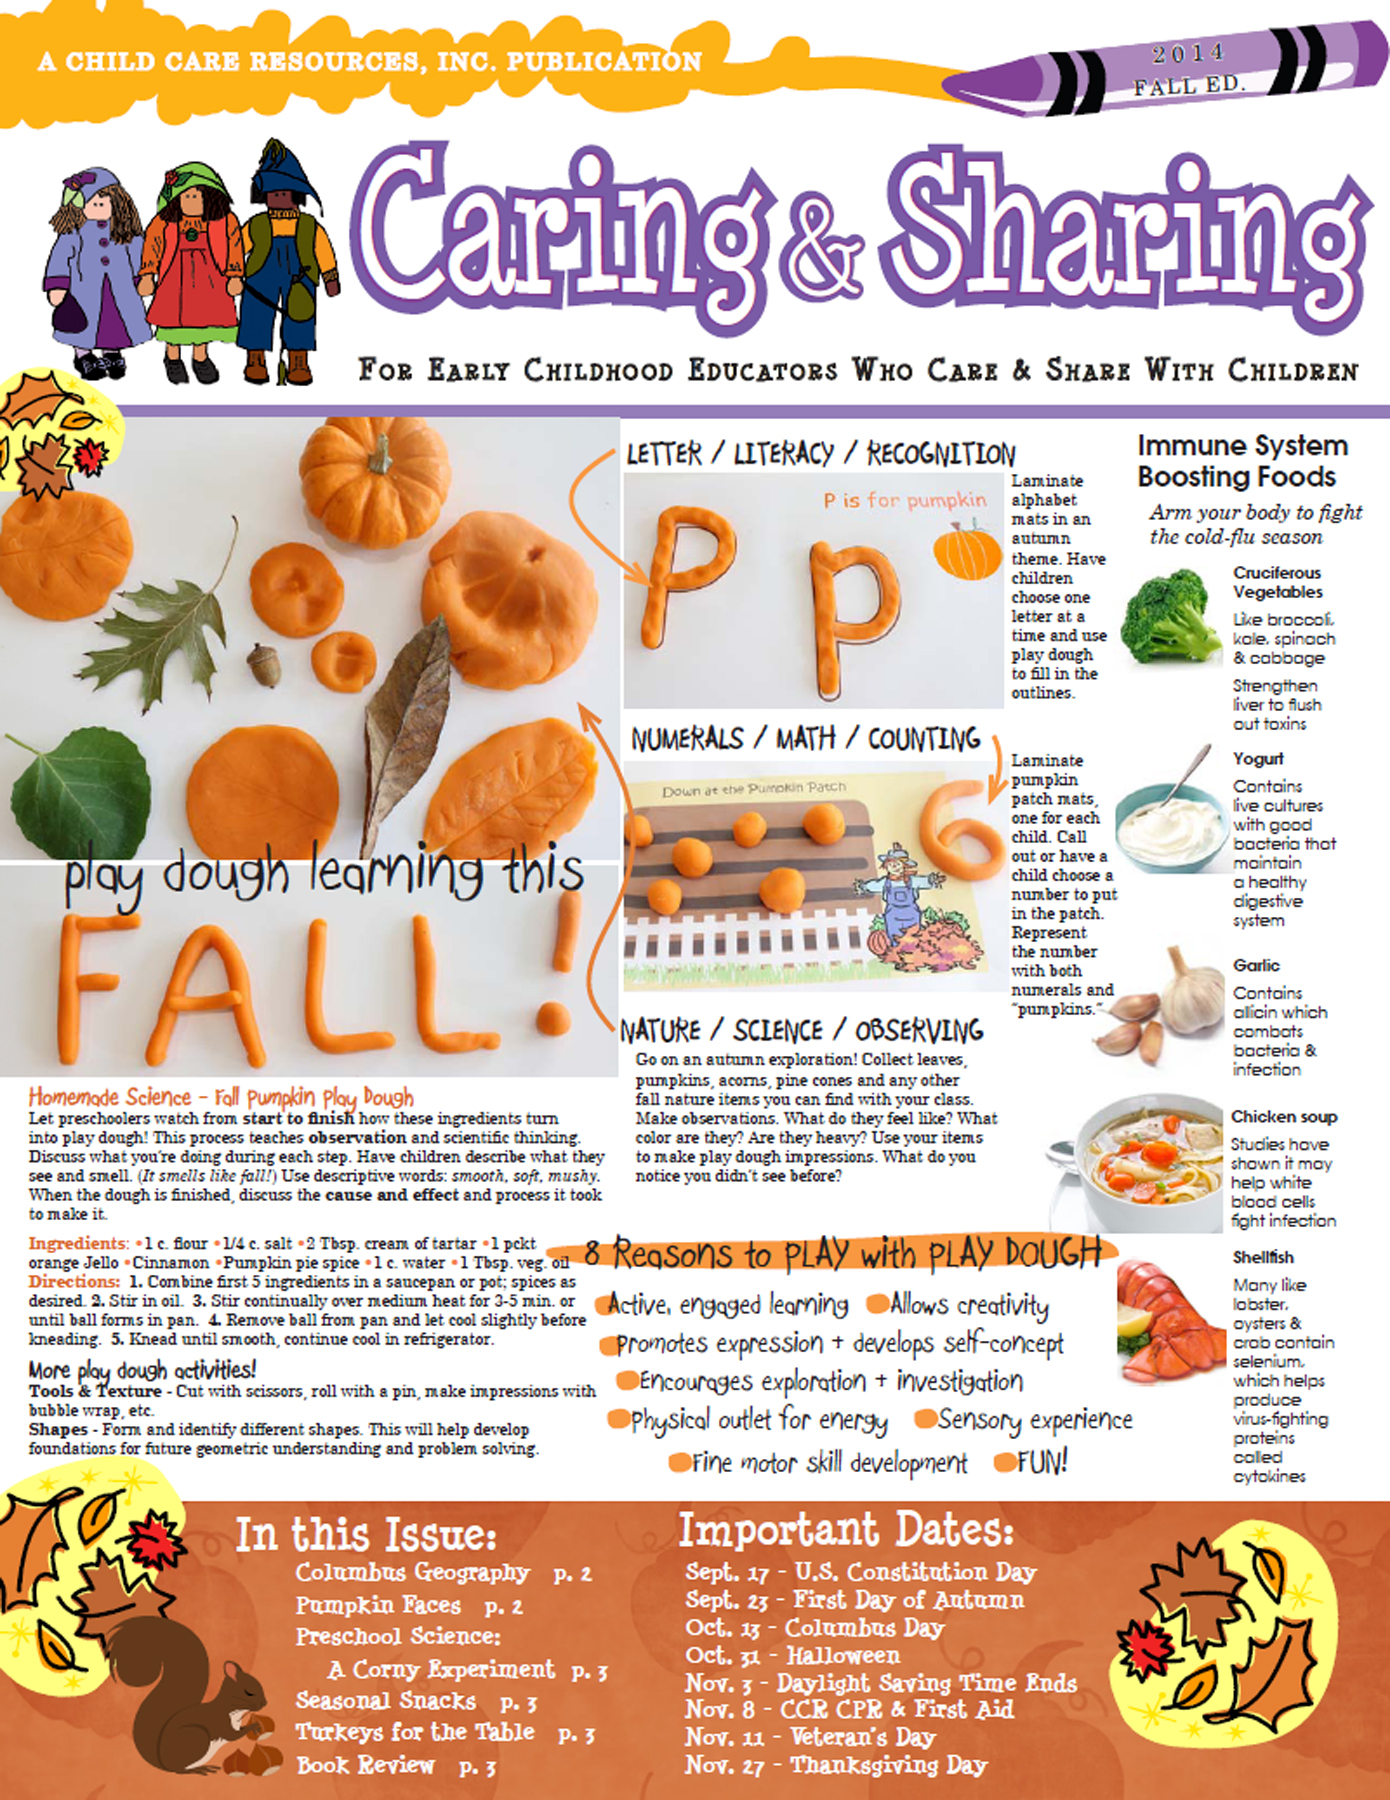 CCR Caring&Sharing Fall 2014 Edition